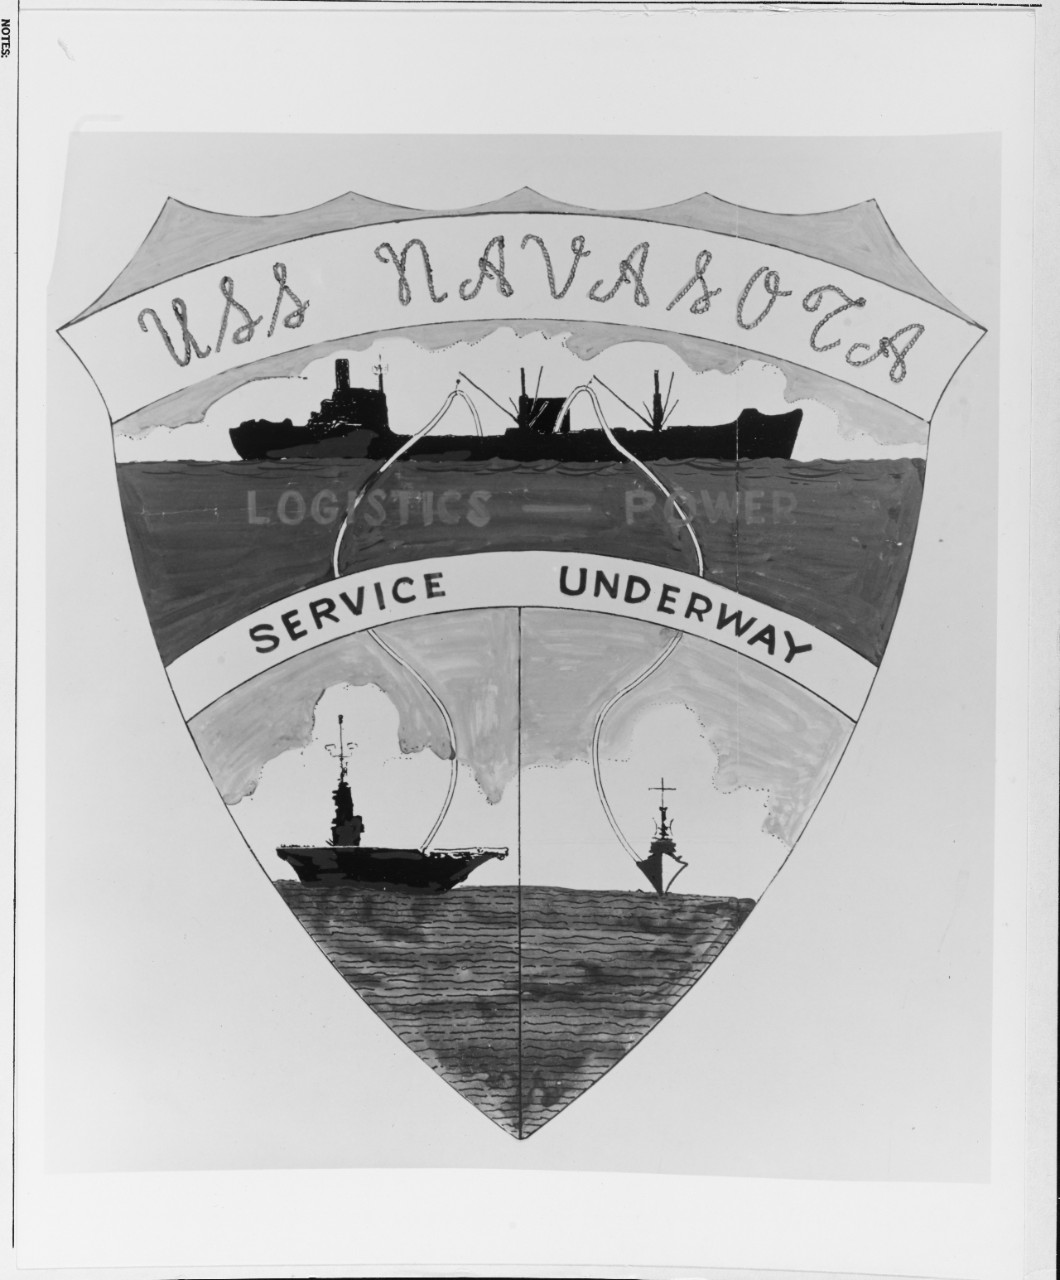 Insignia: USS NAVASOTA (AO-106)